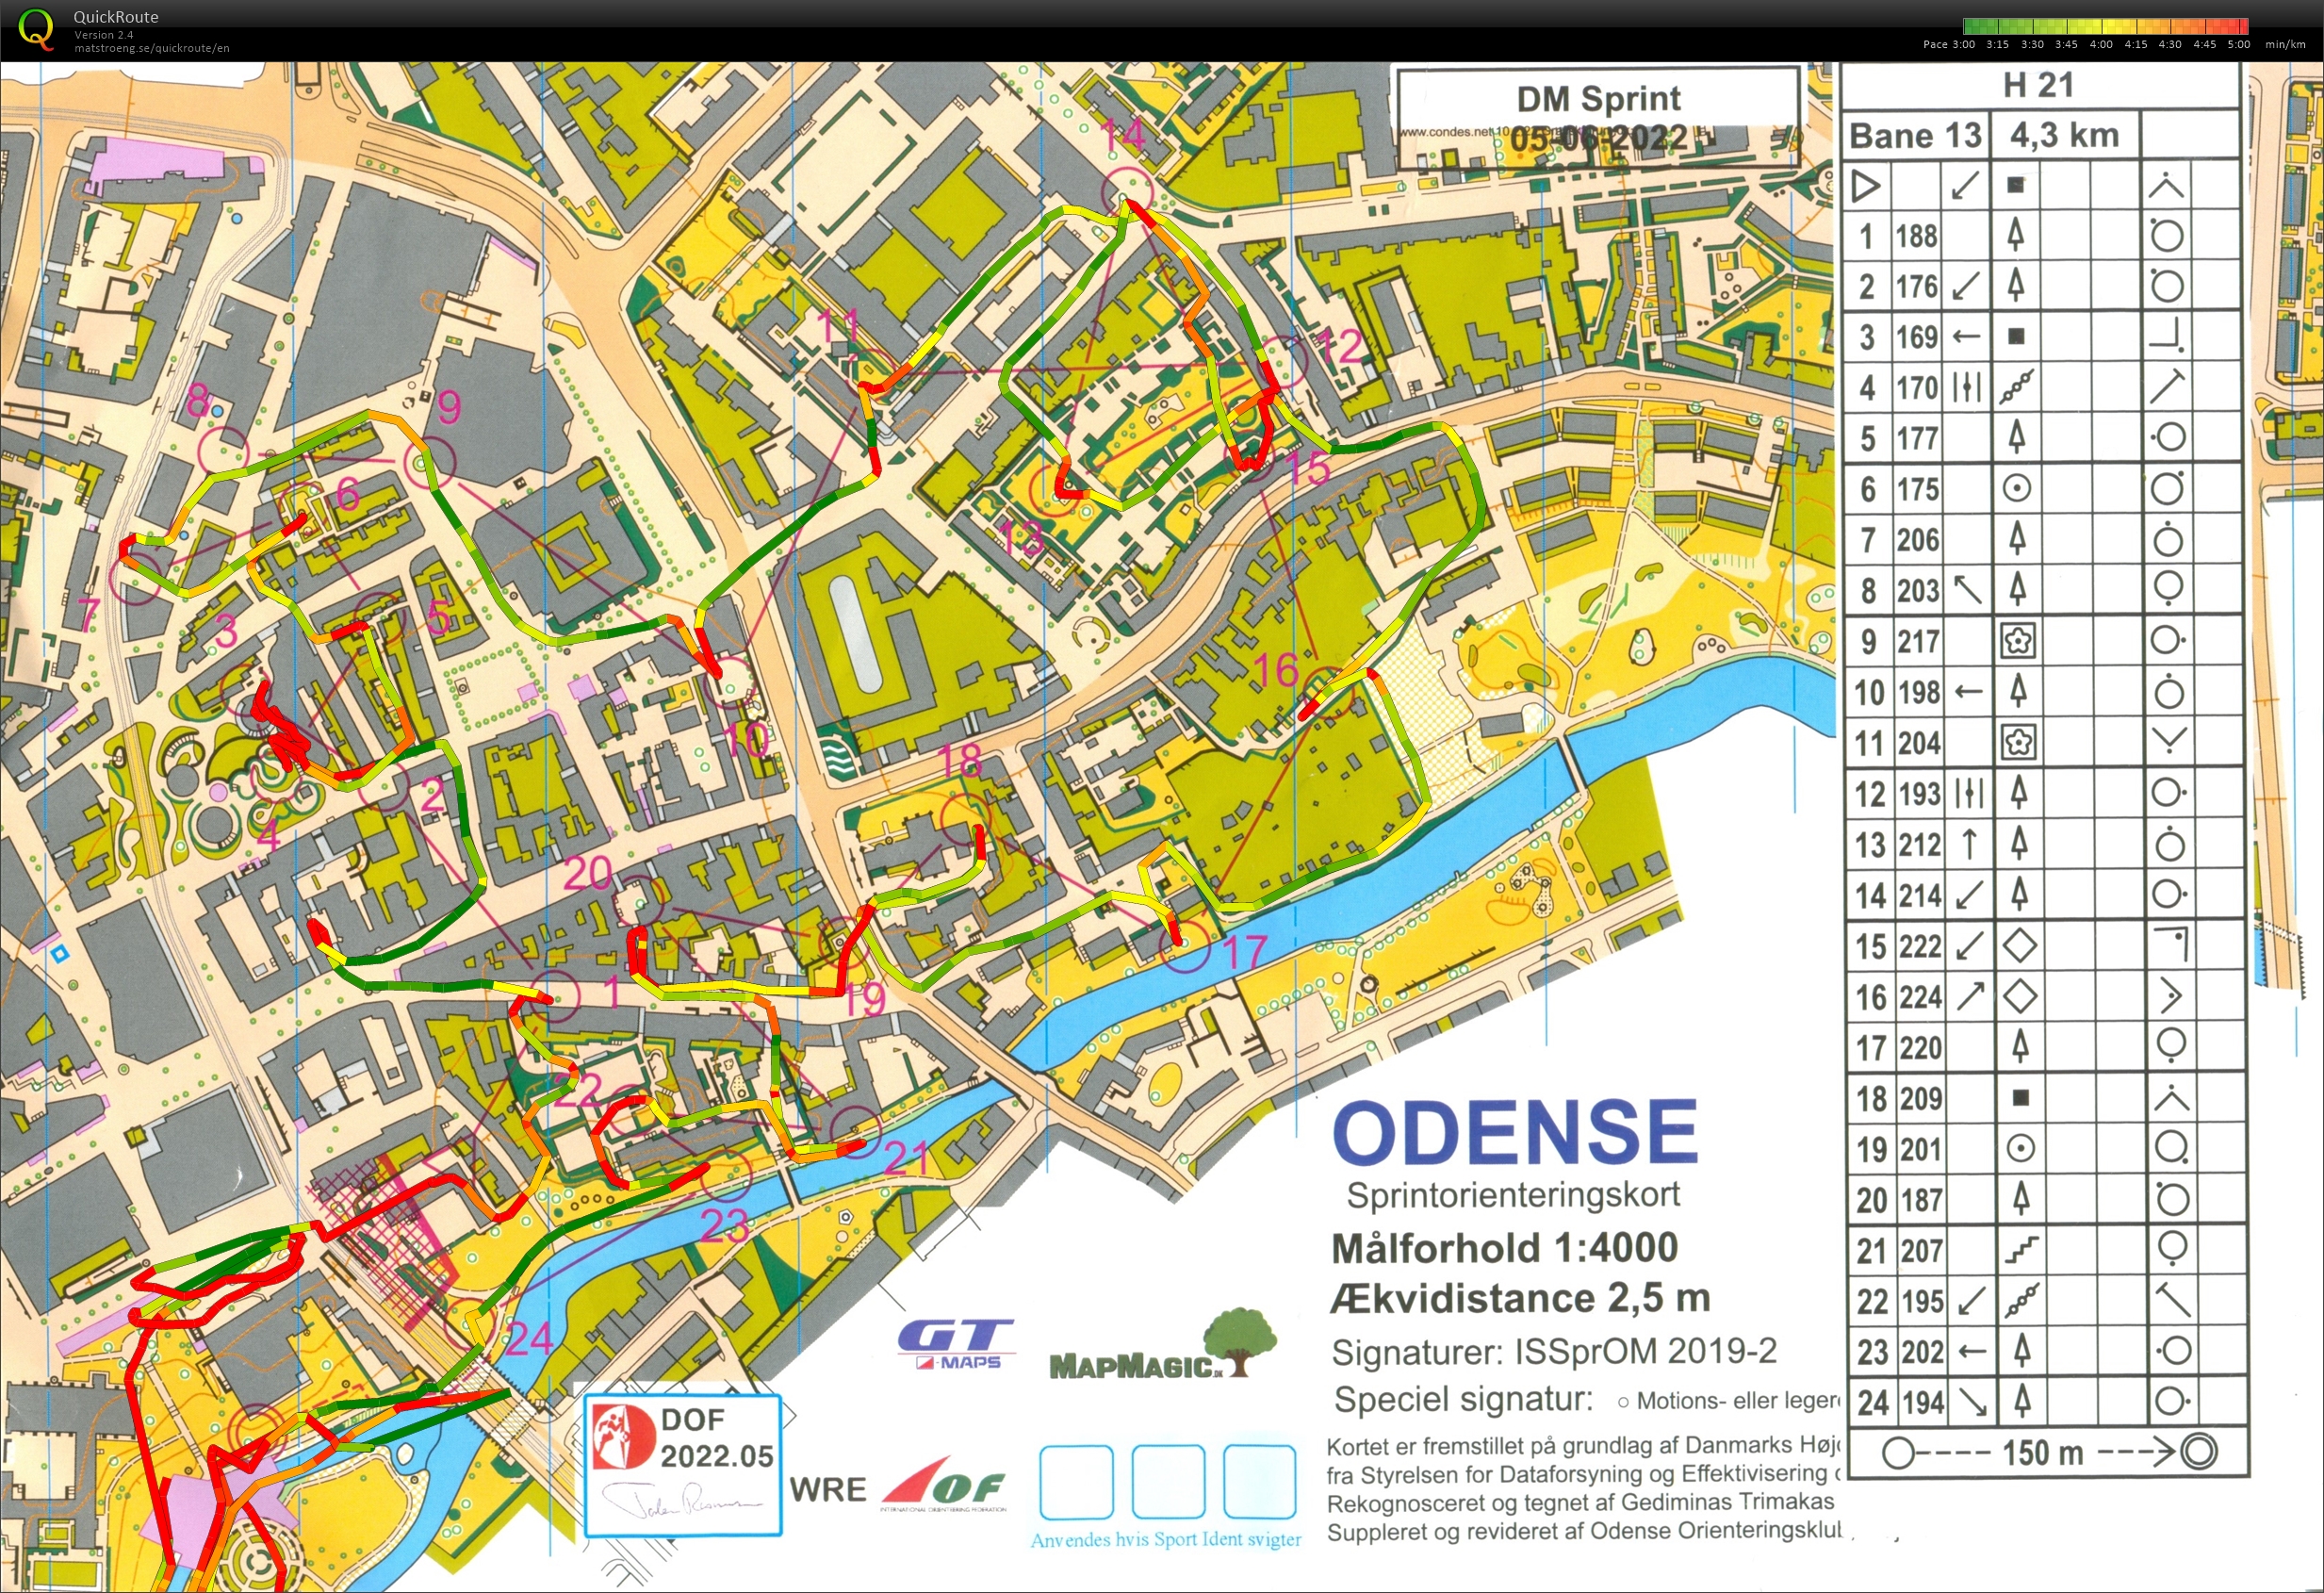 DM Sprint Odense (05/06/2022)